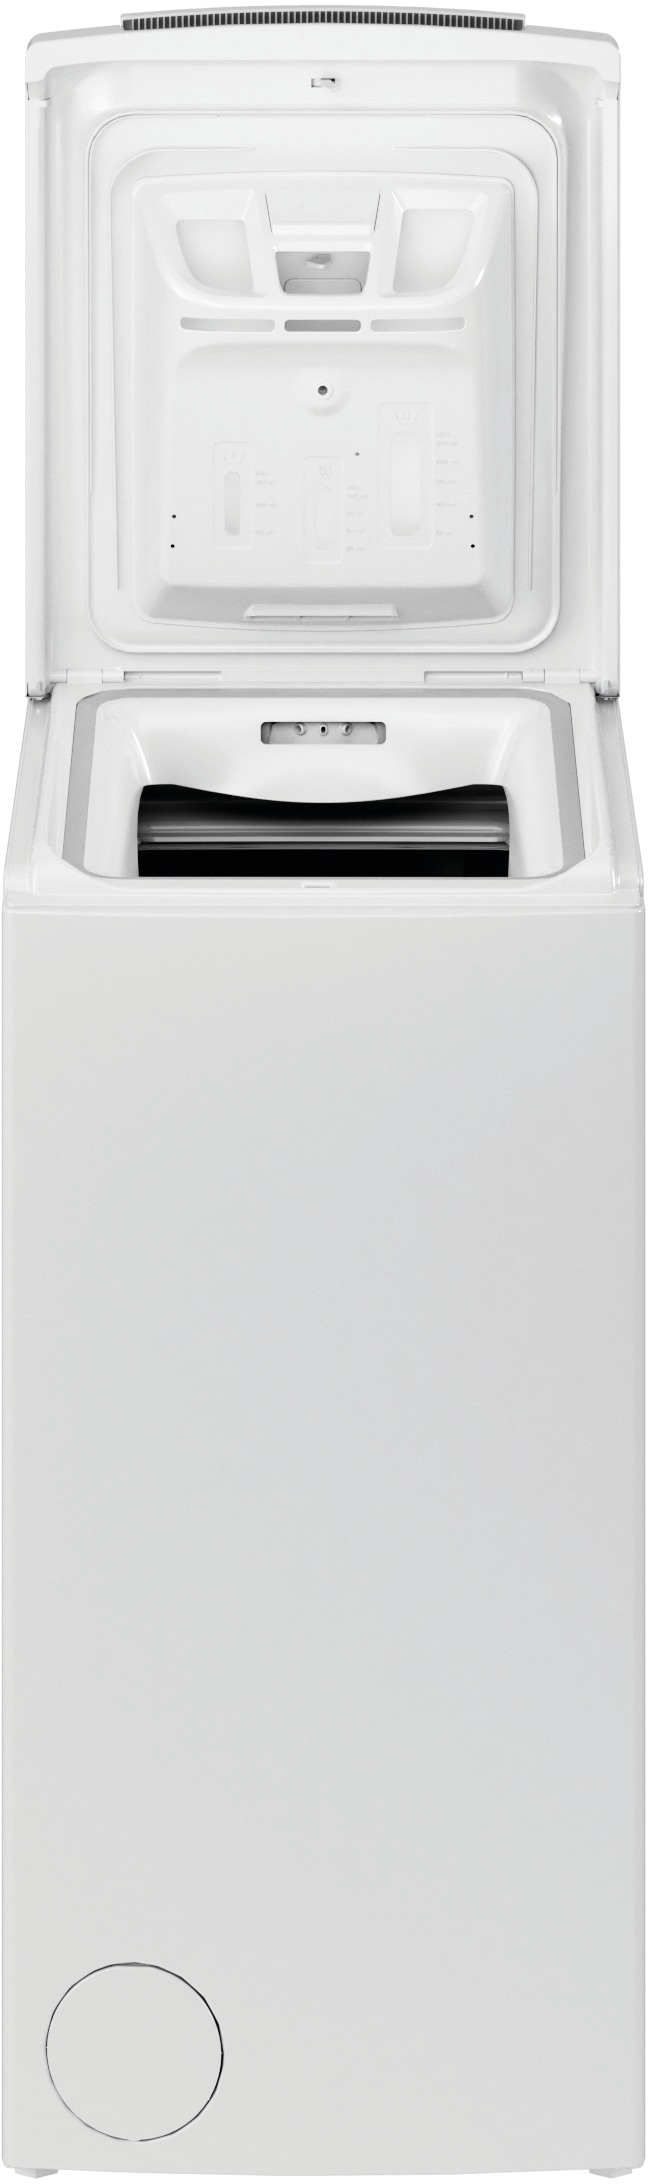 BAUKNECHT Waschmaschine Toplader »WMT Eco Star 6524 Di N«, WMT Eco Star 6524 Di N, 6,5 kg, 1200 U/min